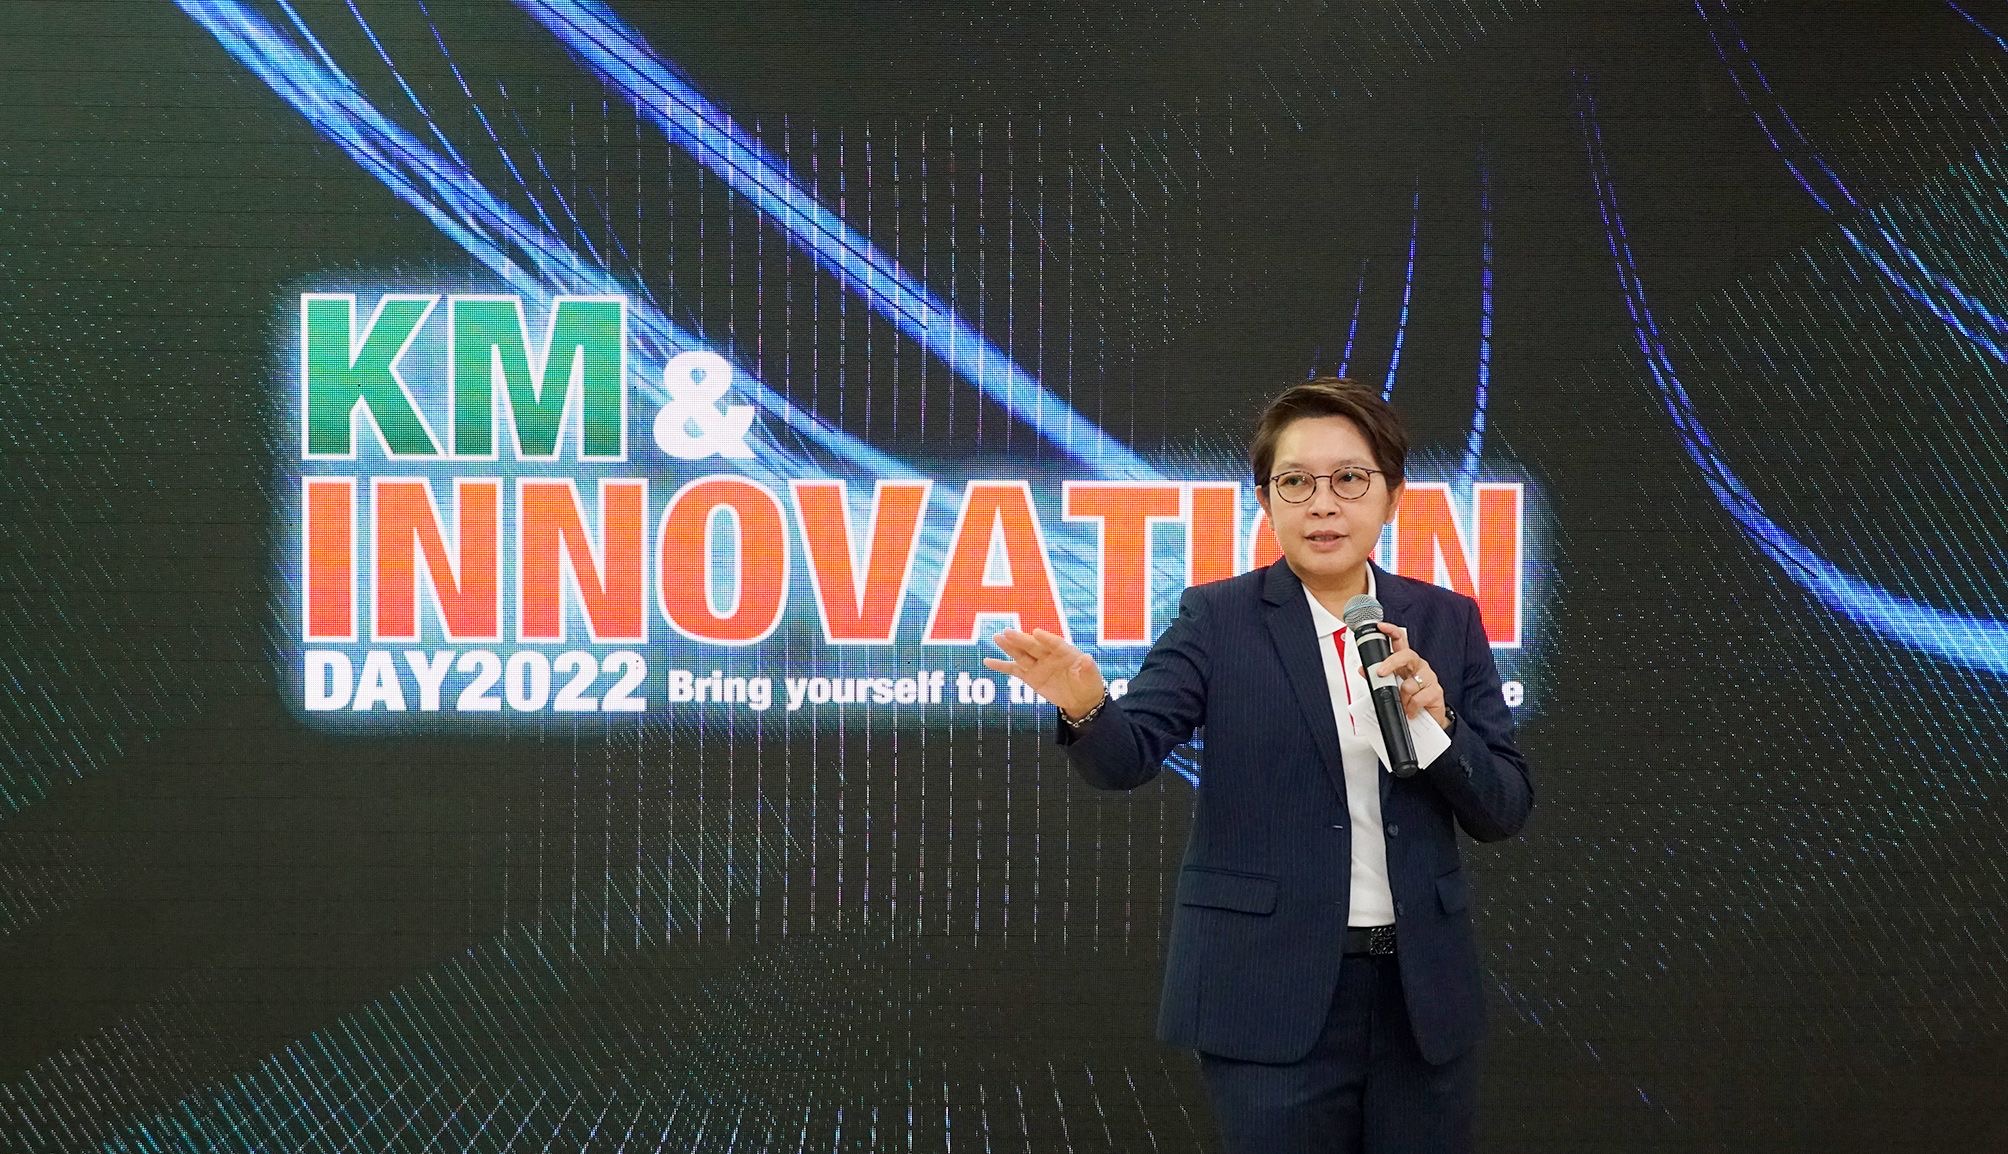 SME D Bank จัดกิจกรรม ‘KM & INNOVATION DAY 2022’ มุ่งสู่องค์กรนวัตกรรม